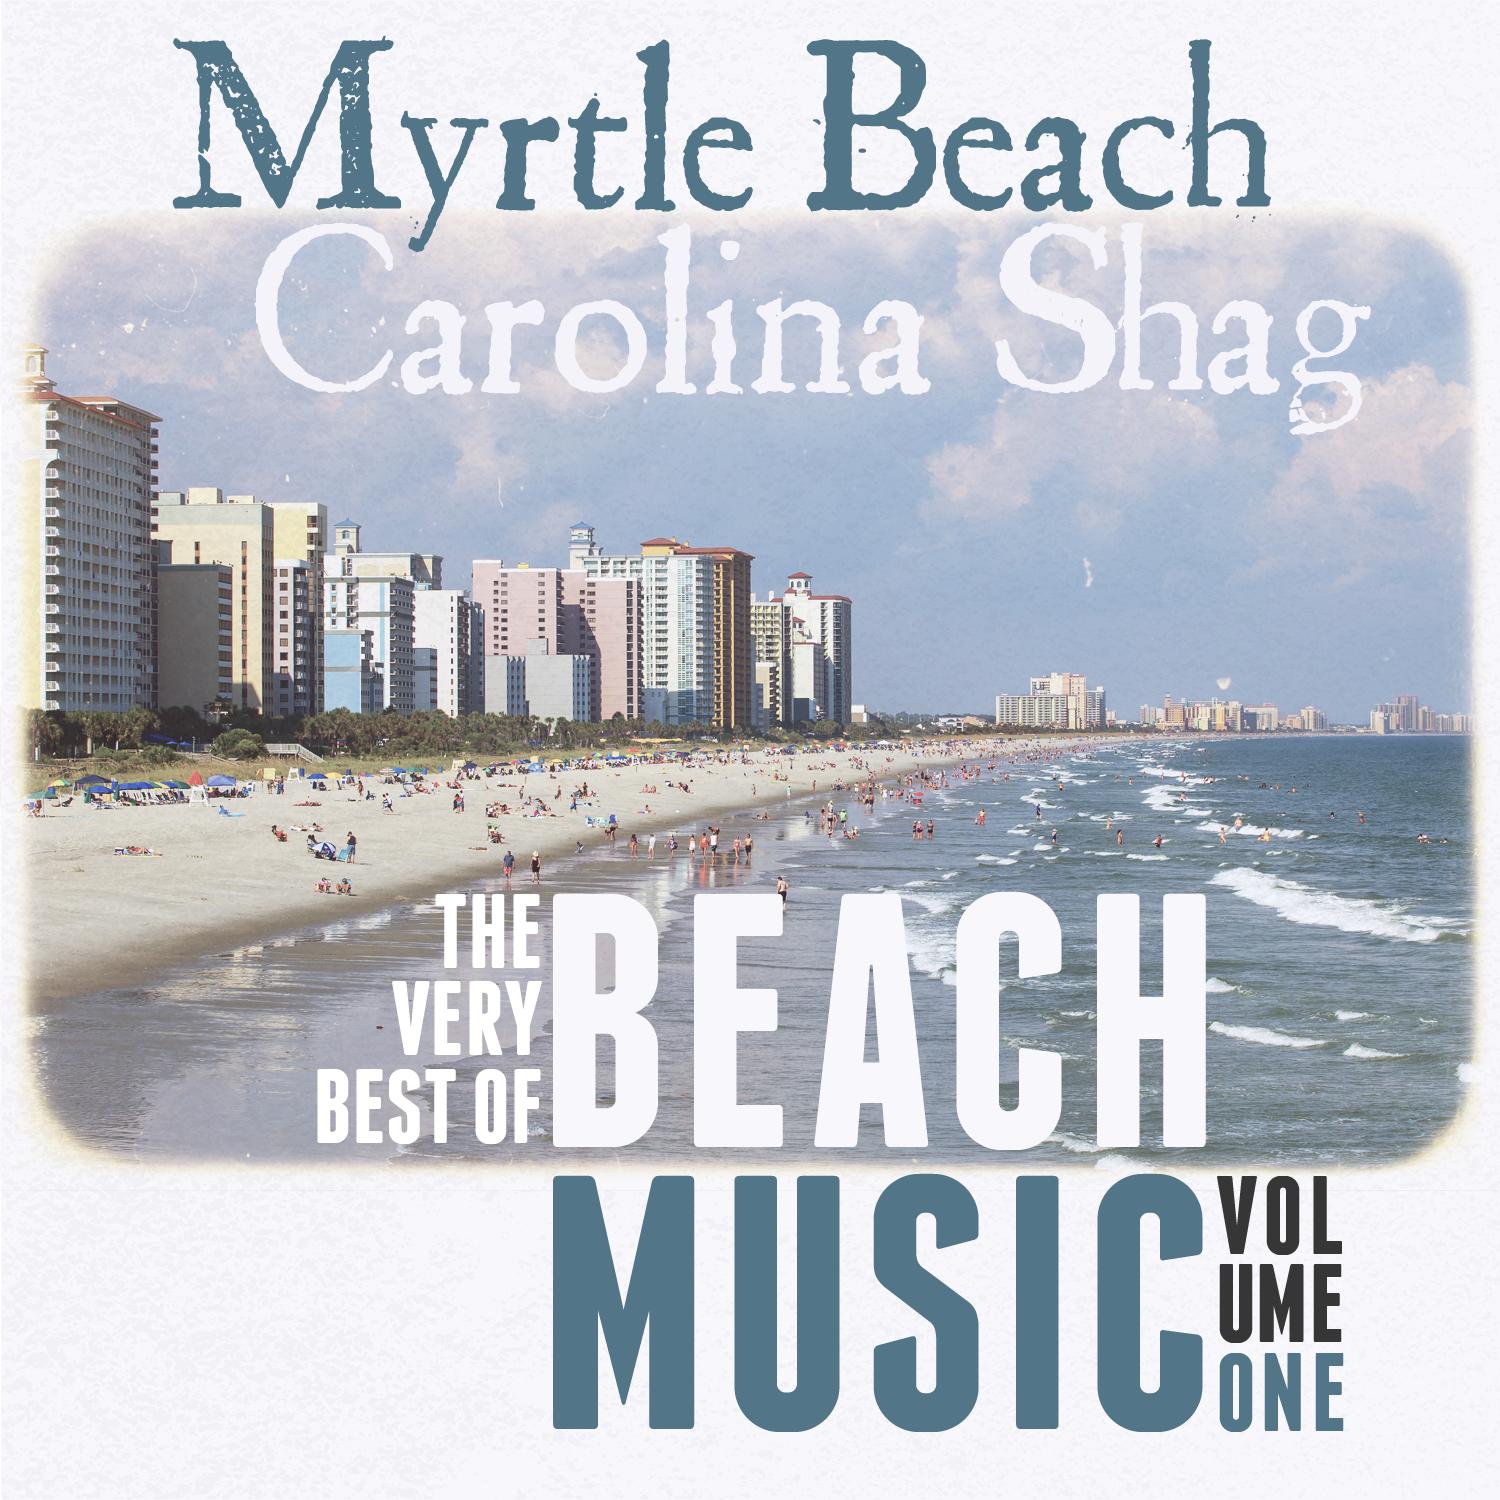 Myrtle Beach Carolina Shag: The Very Best of Beach Music Volume One